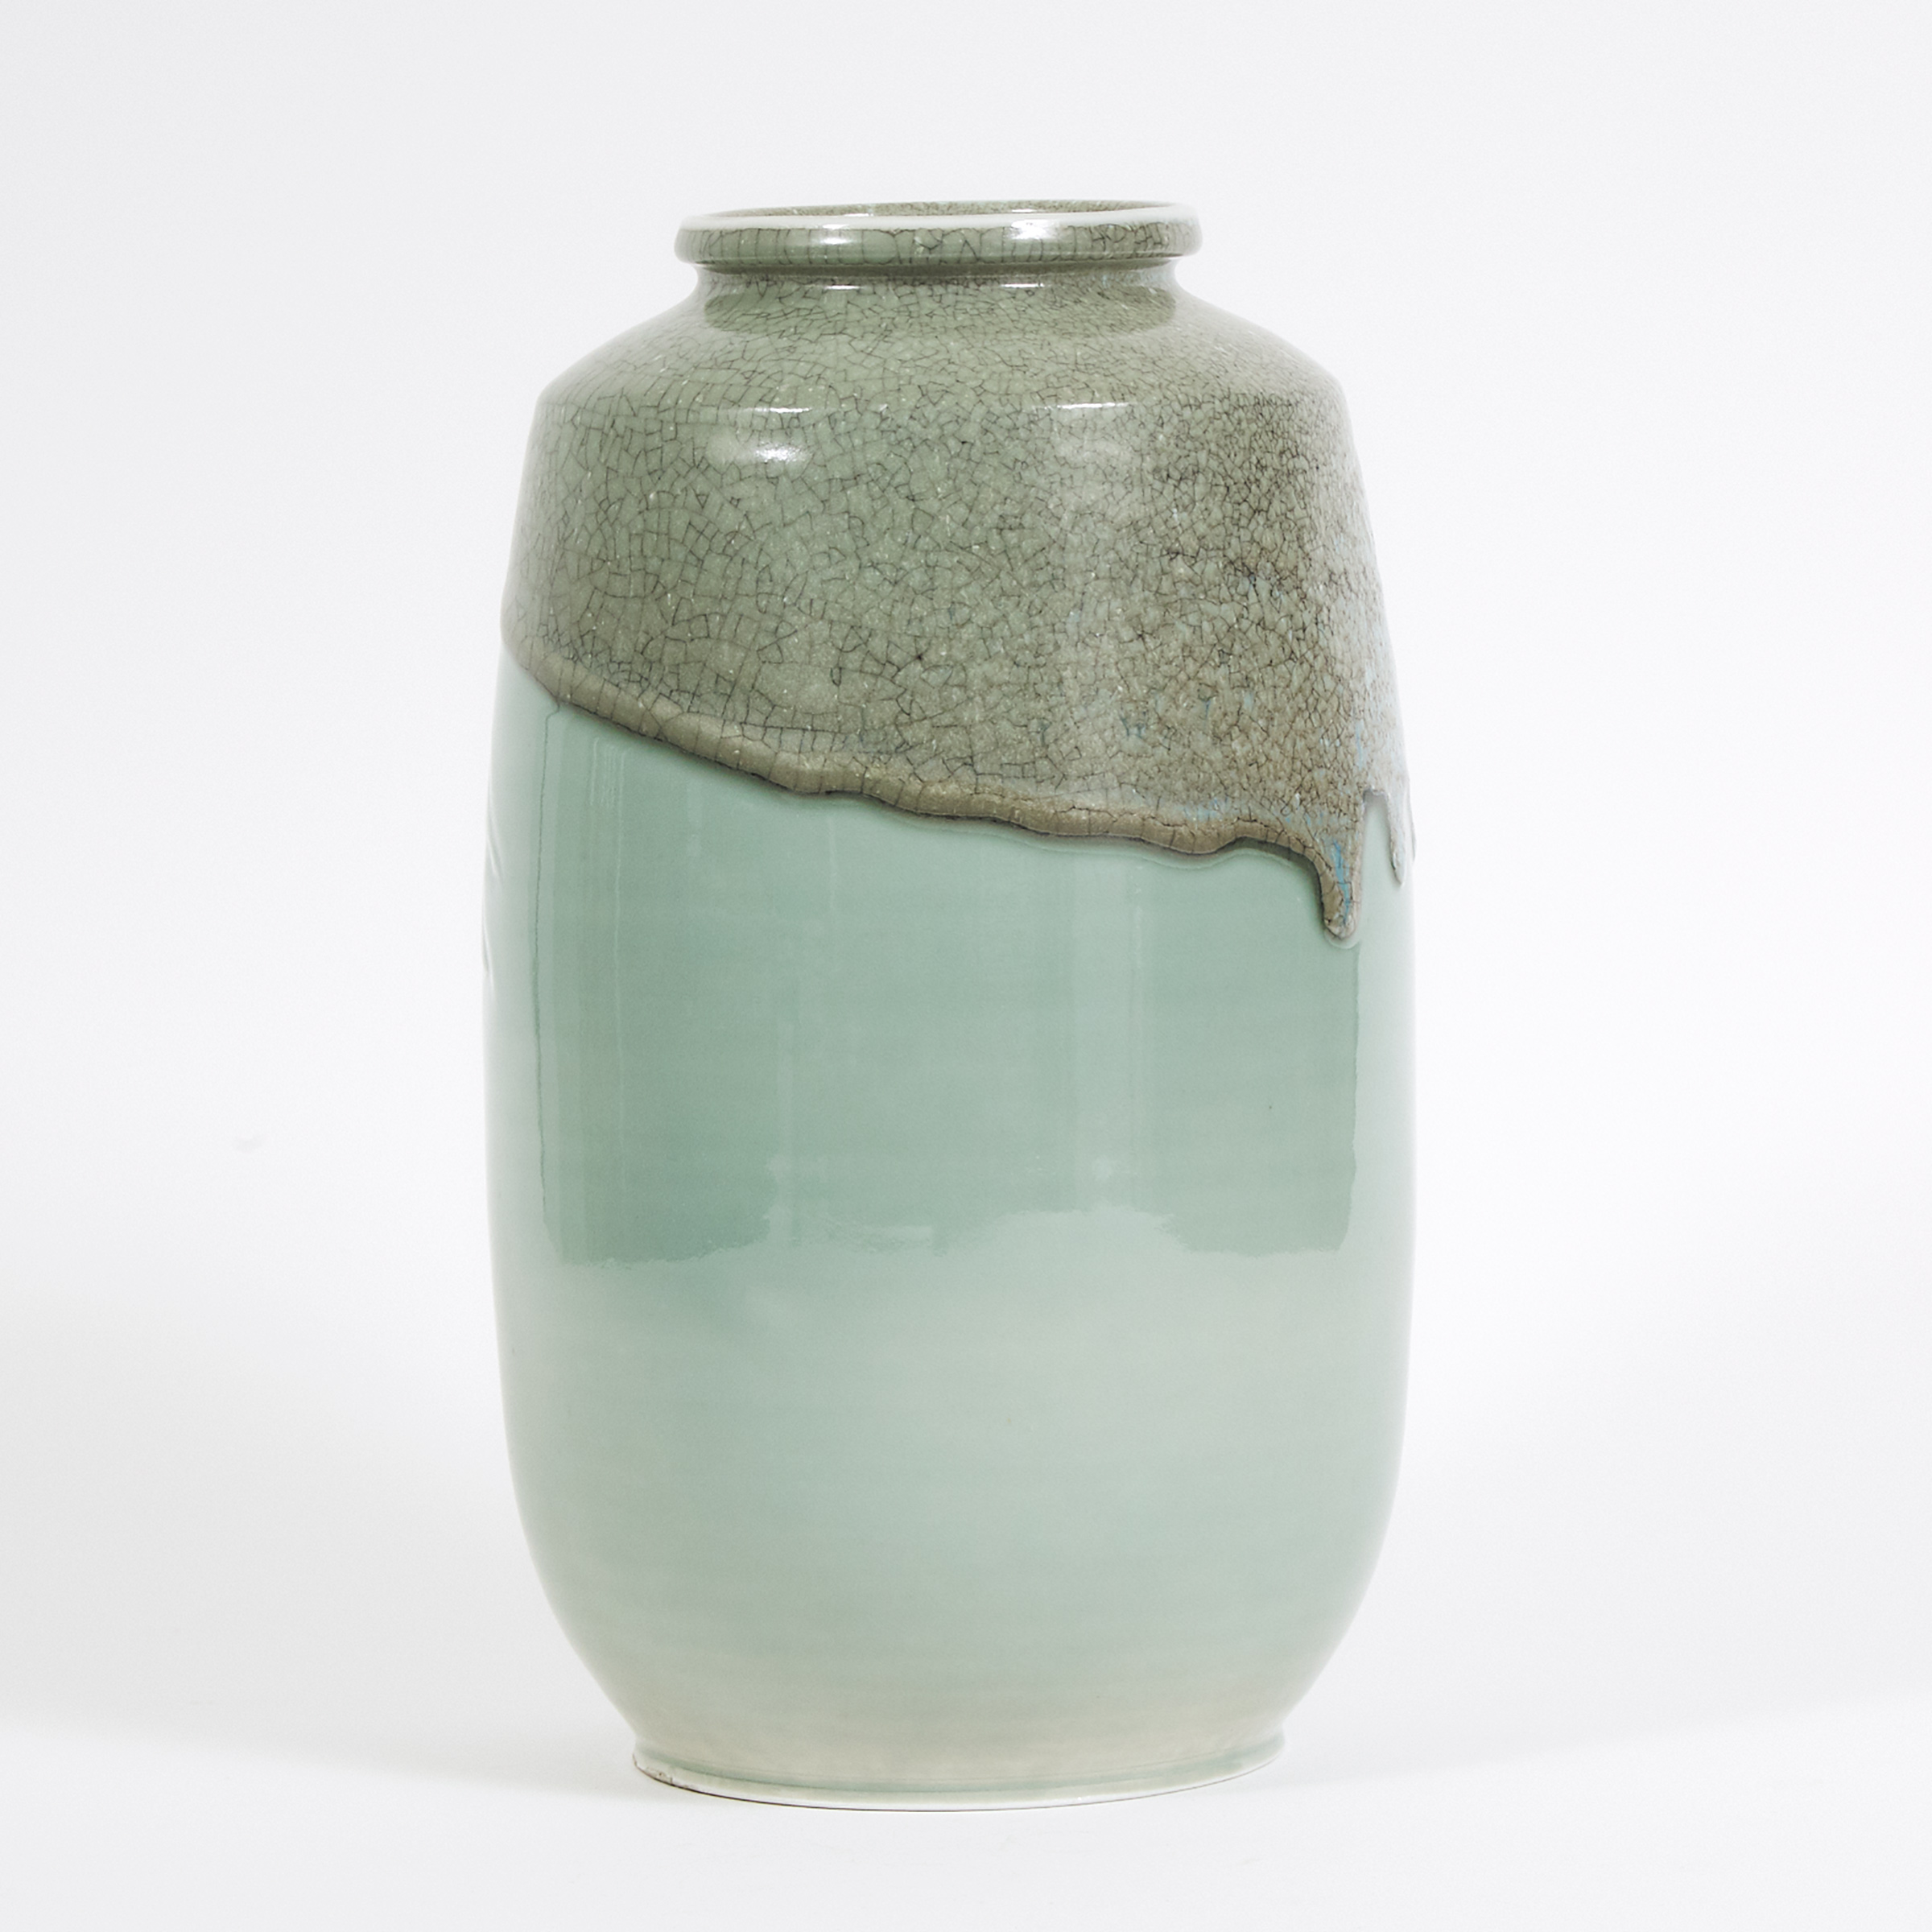 Harlan House (Canadian, b.1943), Pierced and Moulded Celadon Glazed Vase, 1993